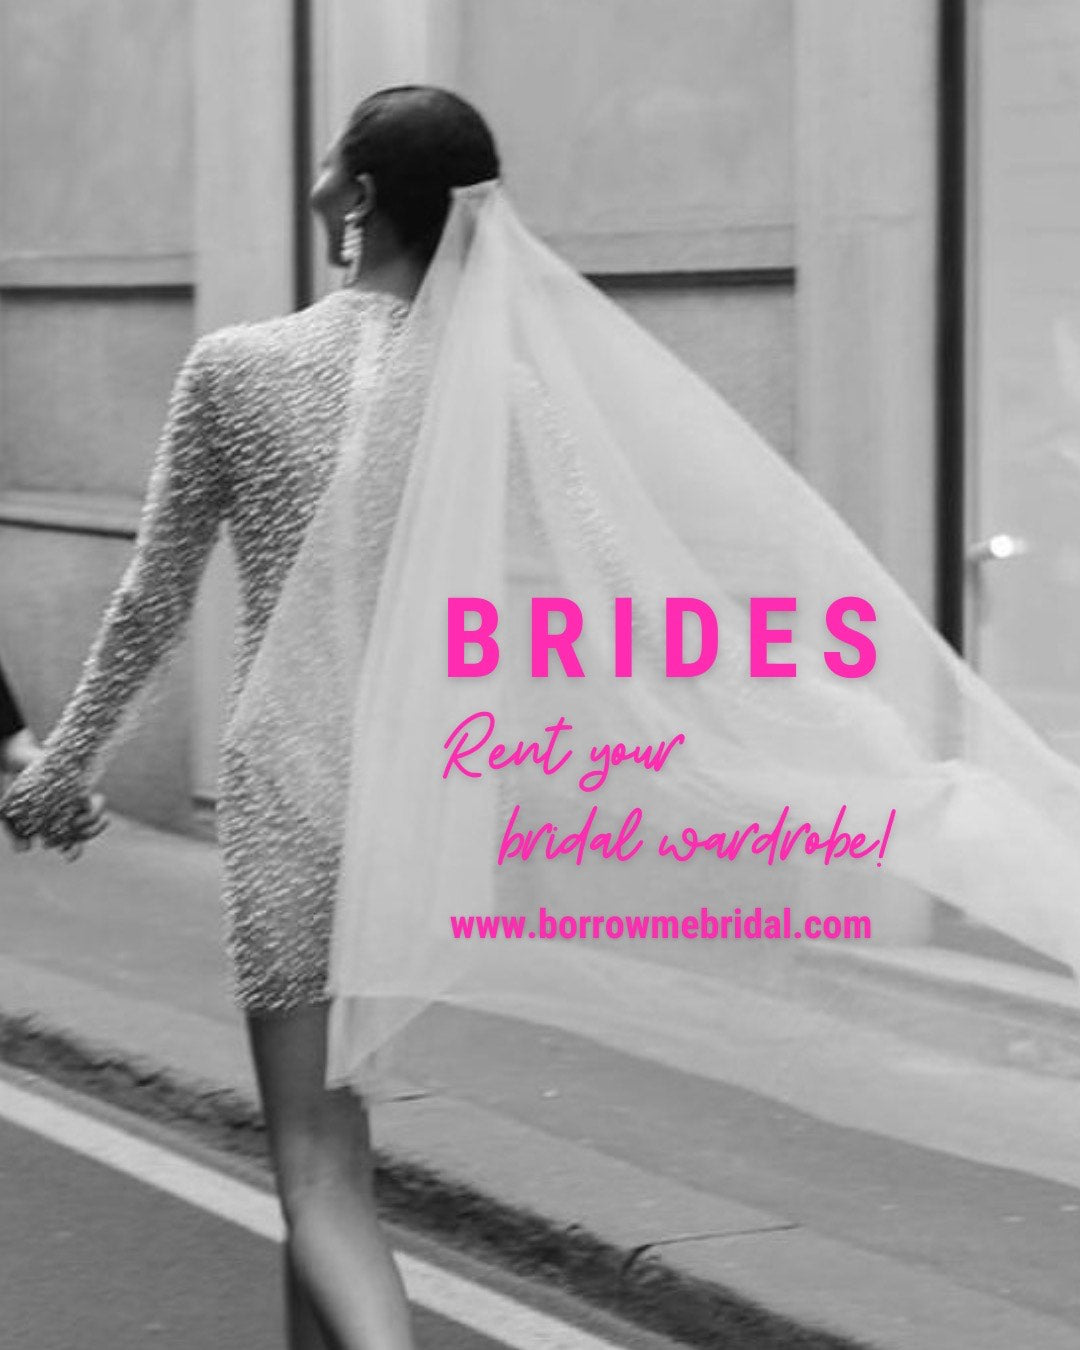 Count on Borrow Me Bridal To Save Brides Money!